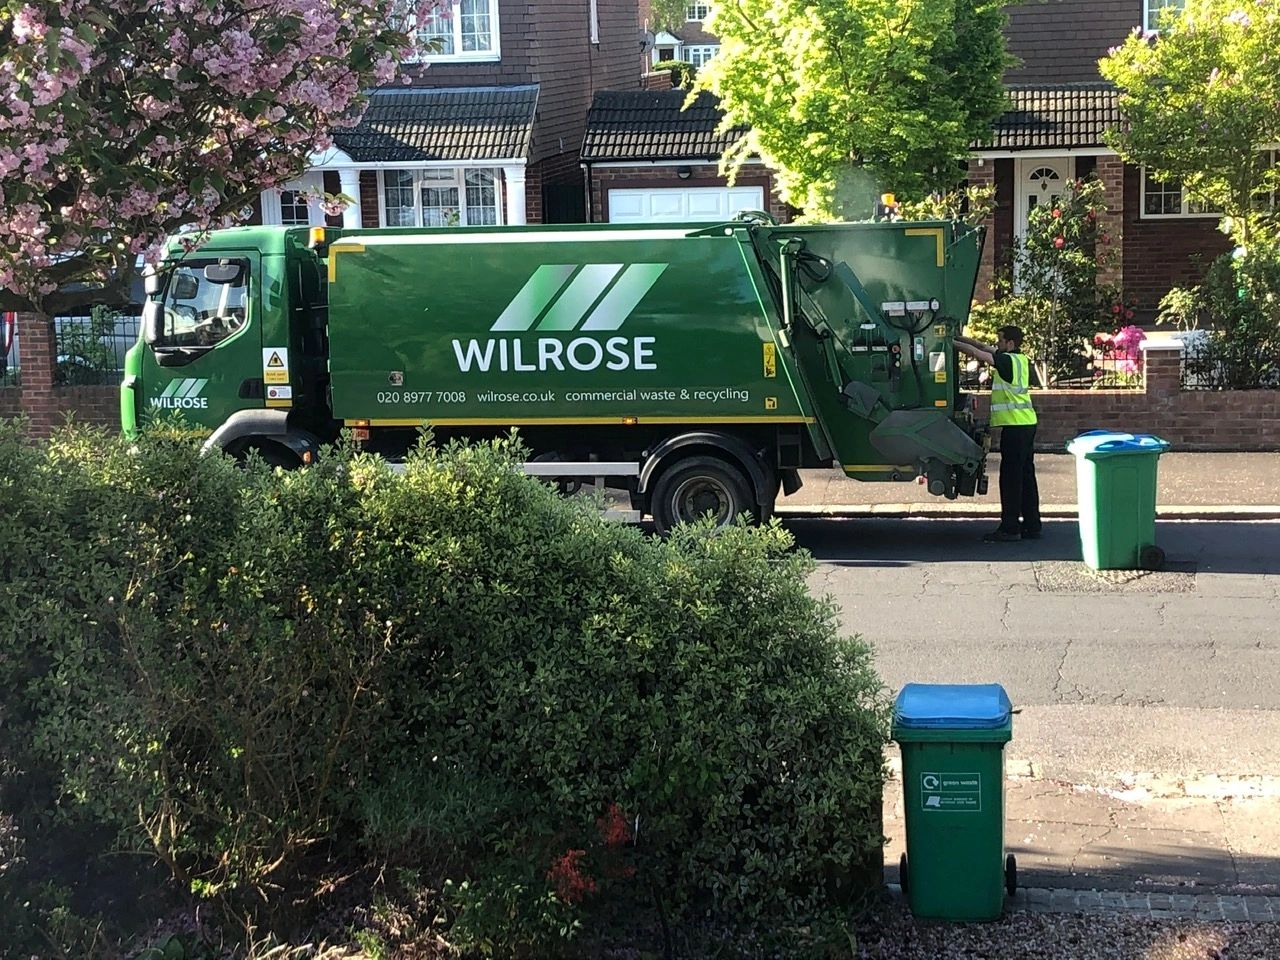 Green Waste dustcart emptying green waste bins in Richmond, Surrey and Middlesex.